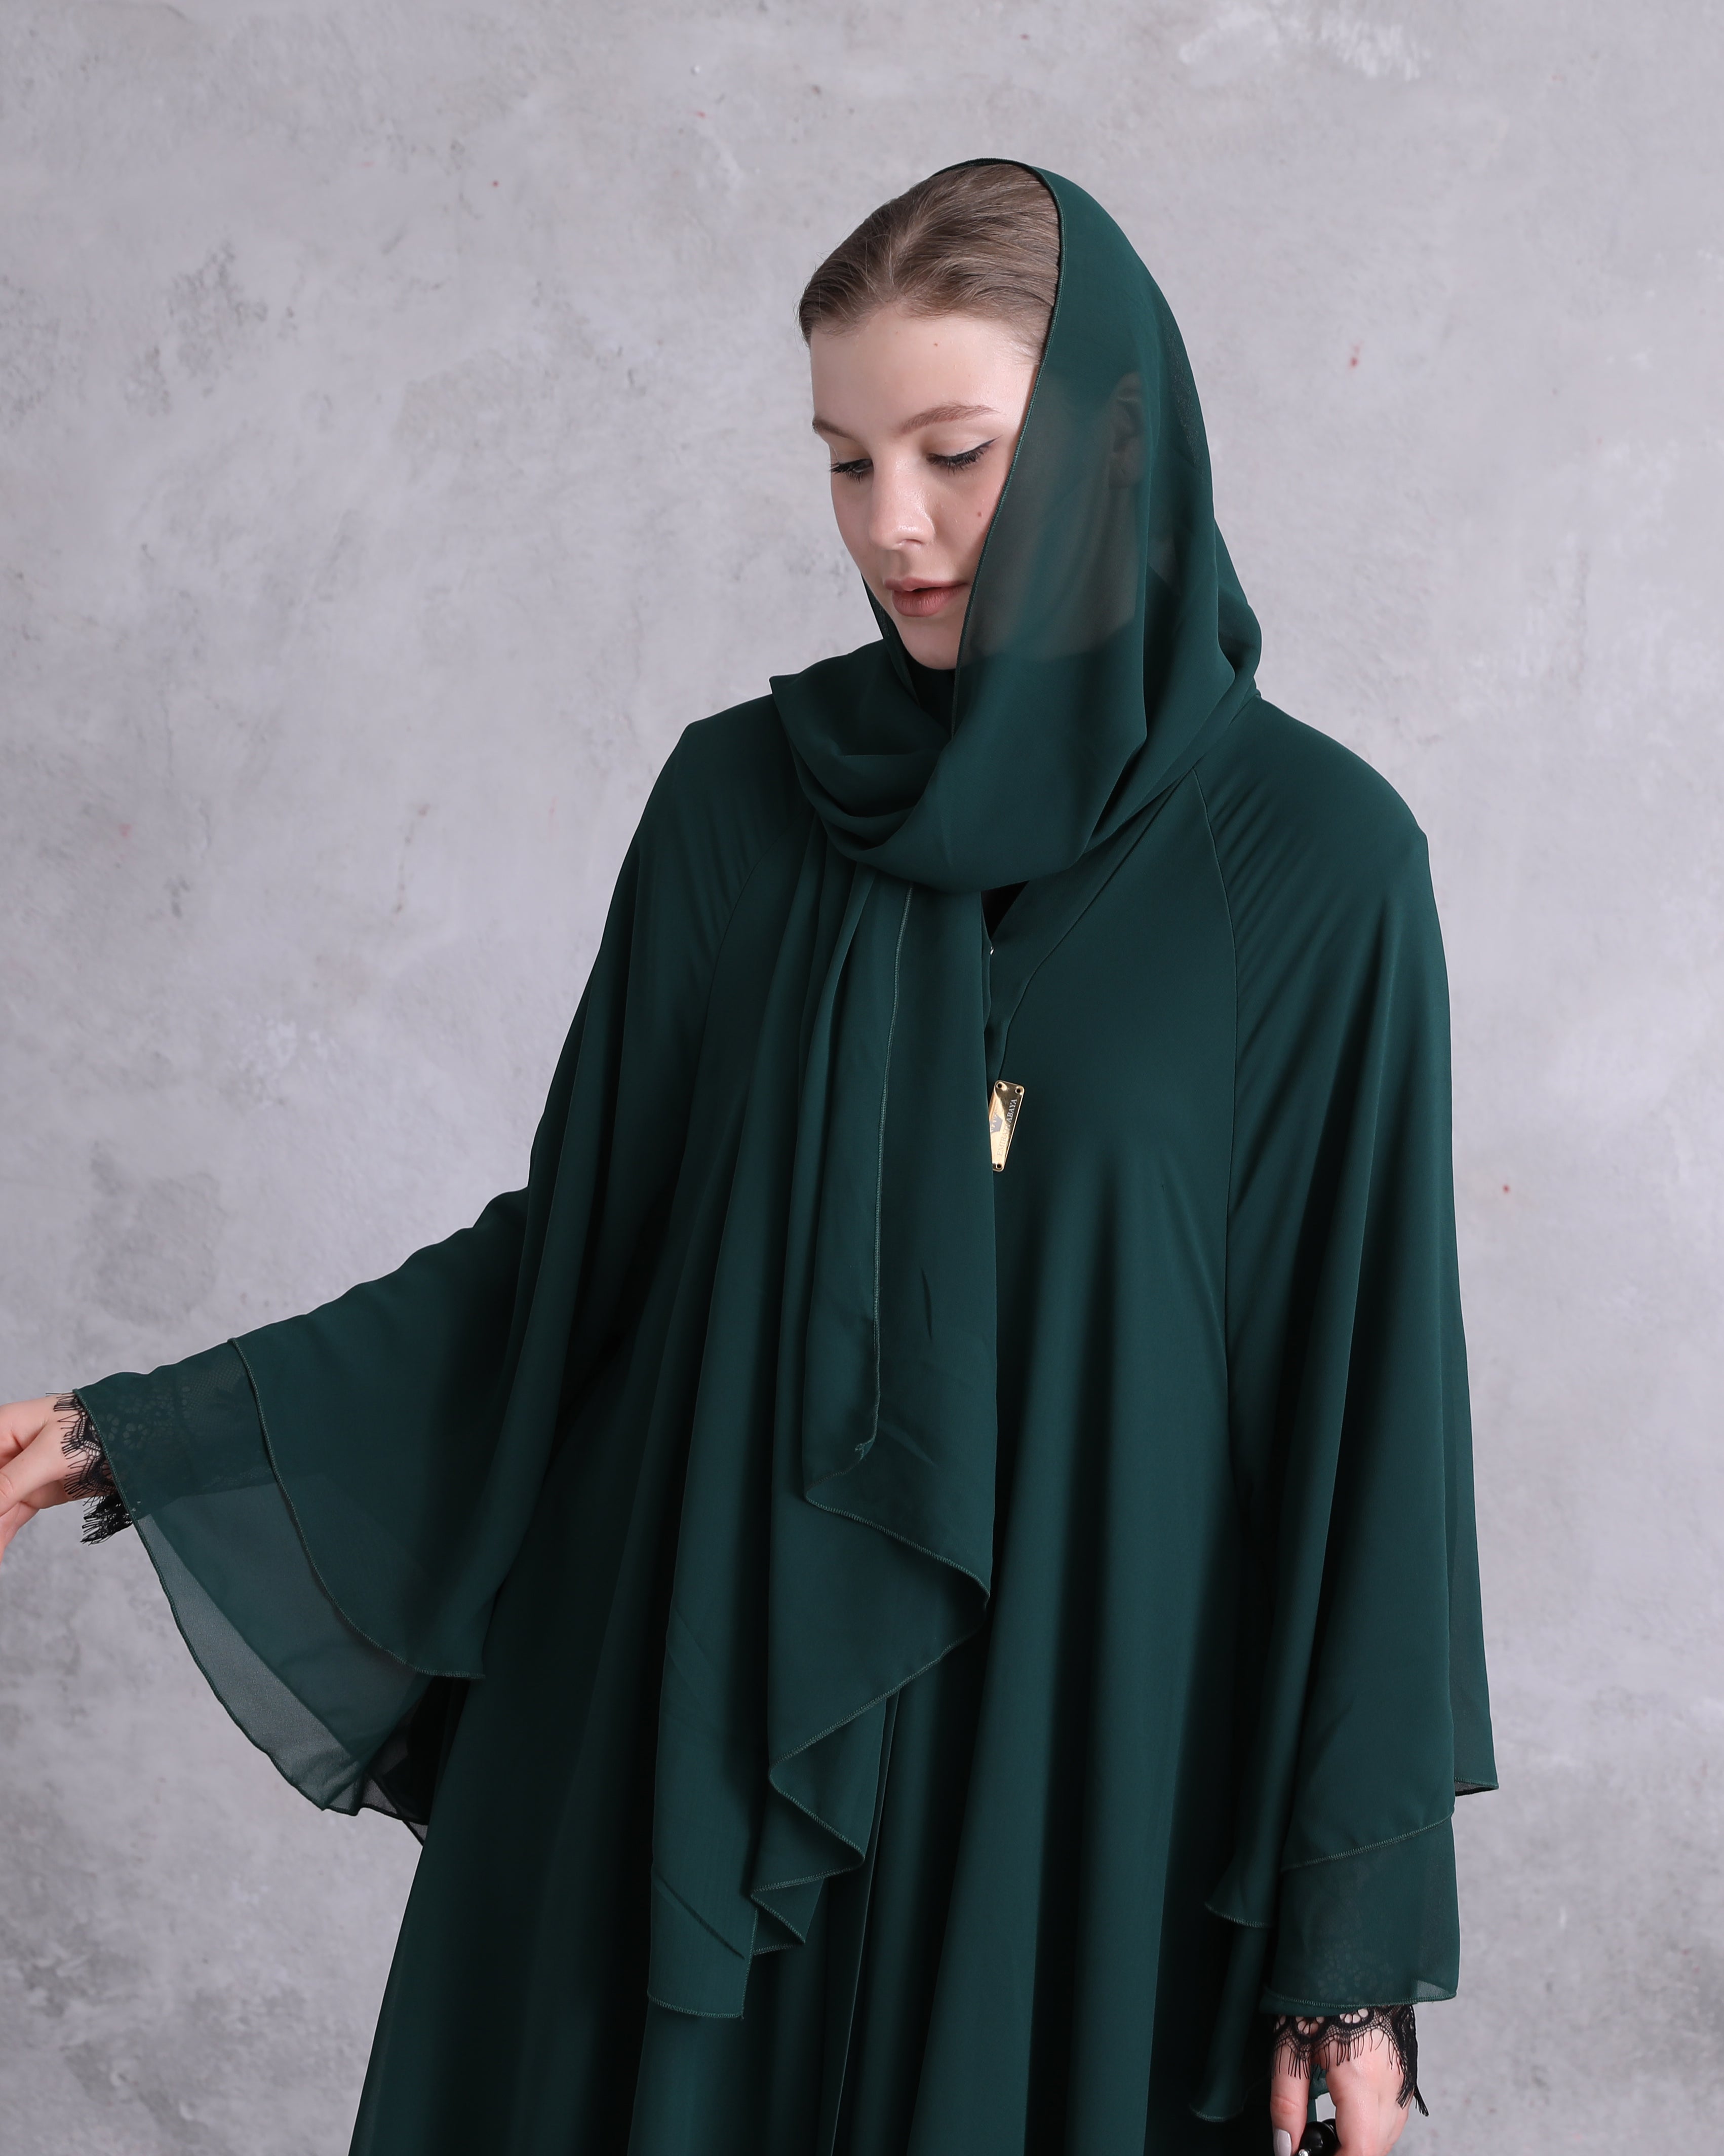 A Stunning Three-Layered Green Abaya